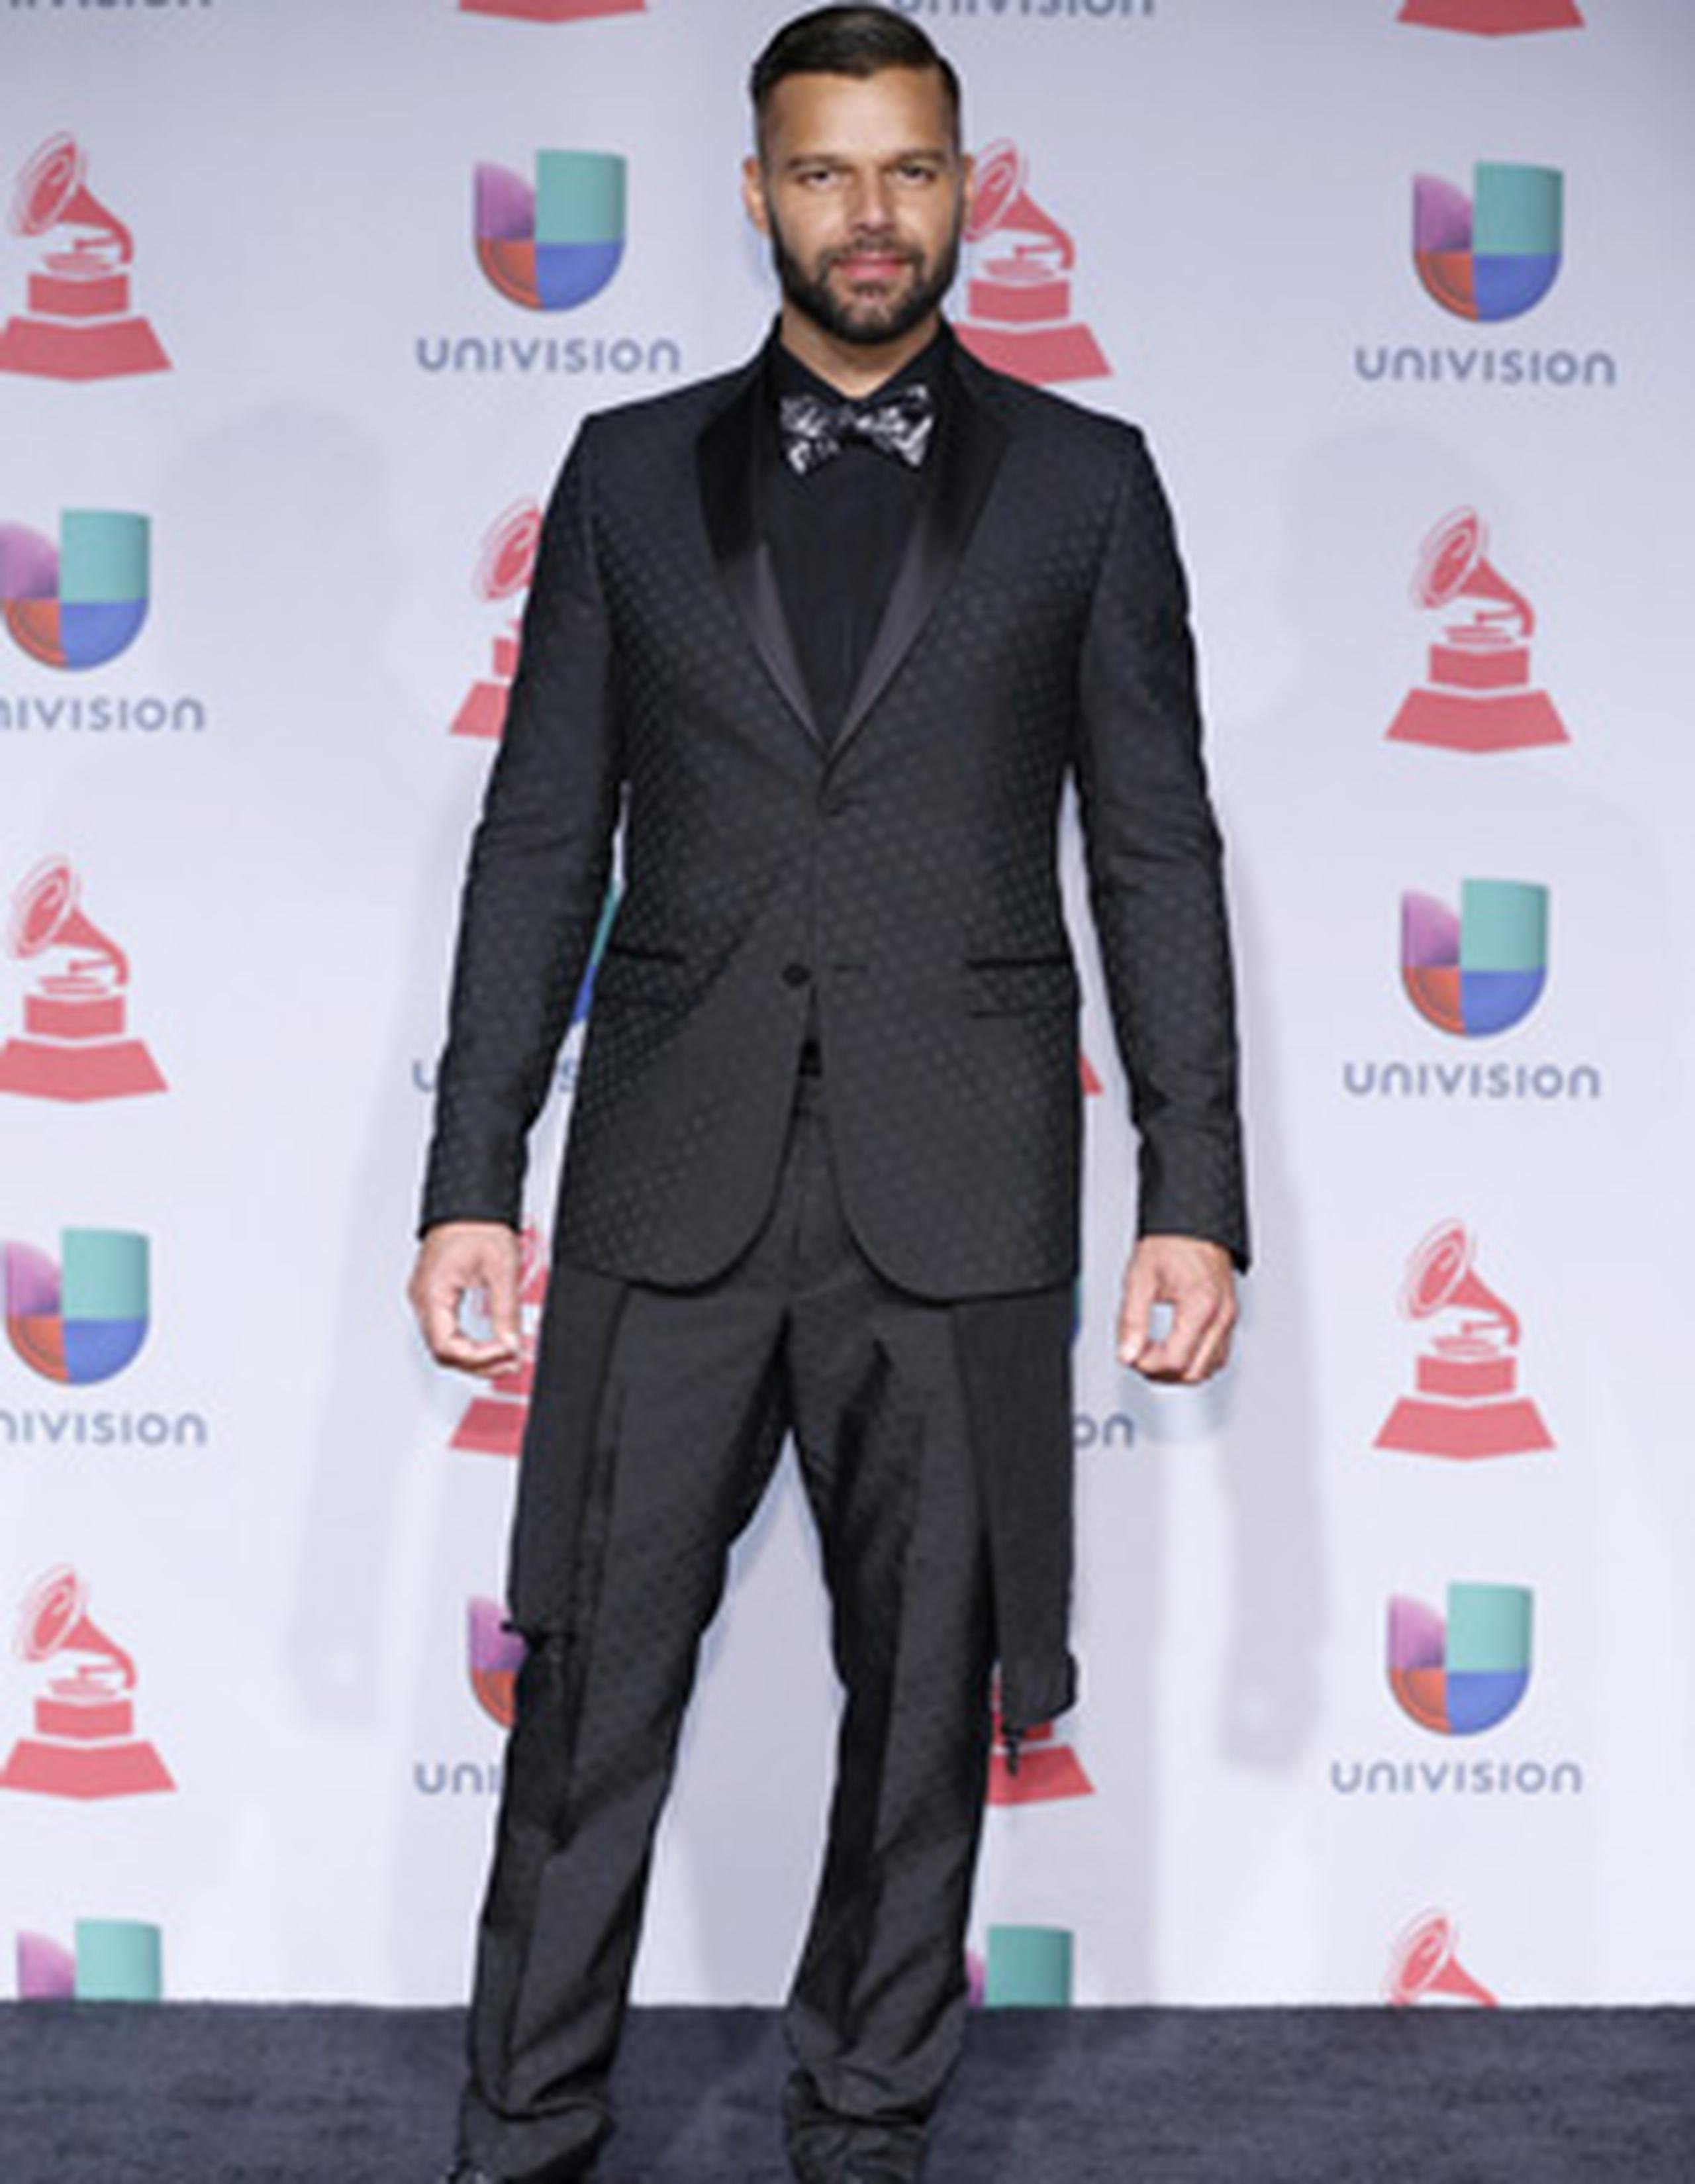 Ricky Martin lució un elegante frac negro con discretos estampados, solapa satinada y corbata de moño. (AP)